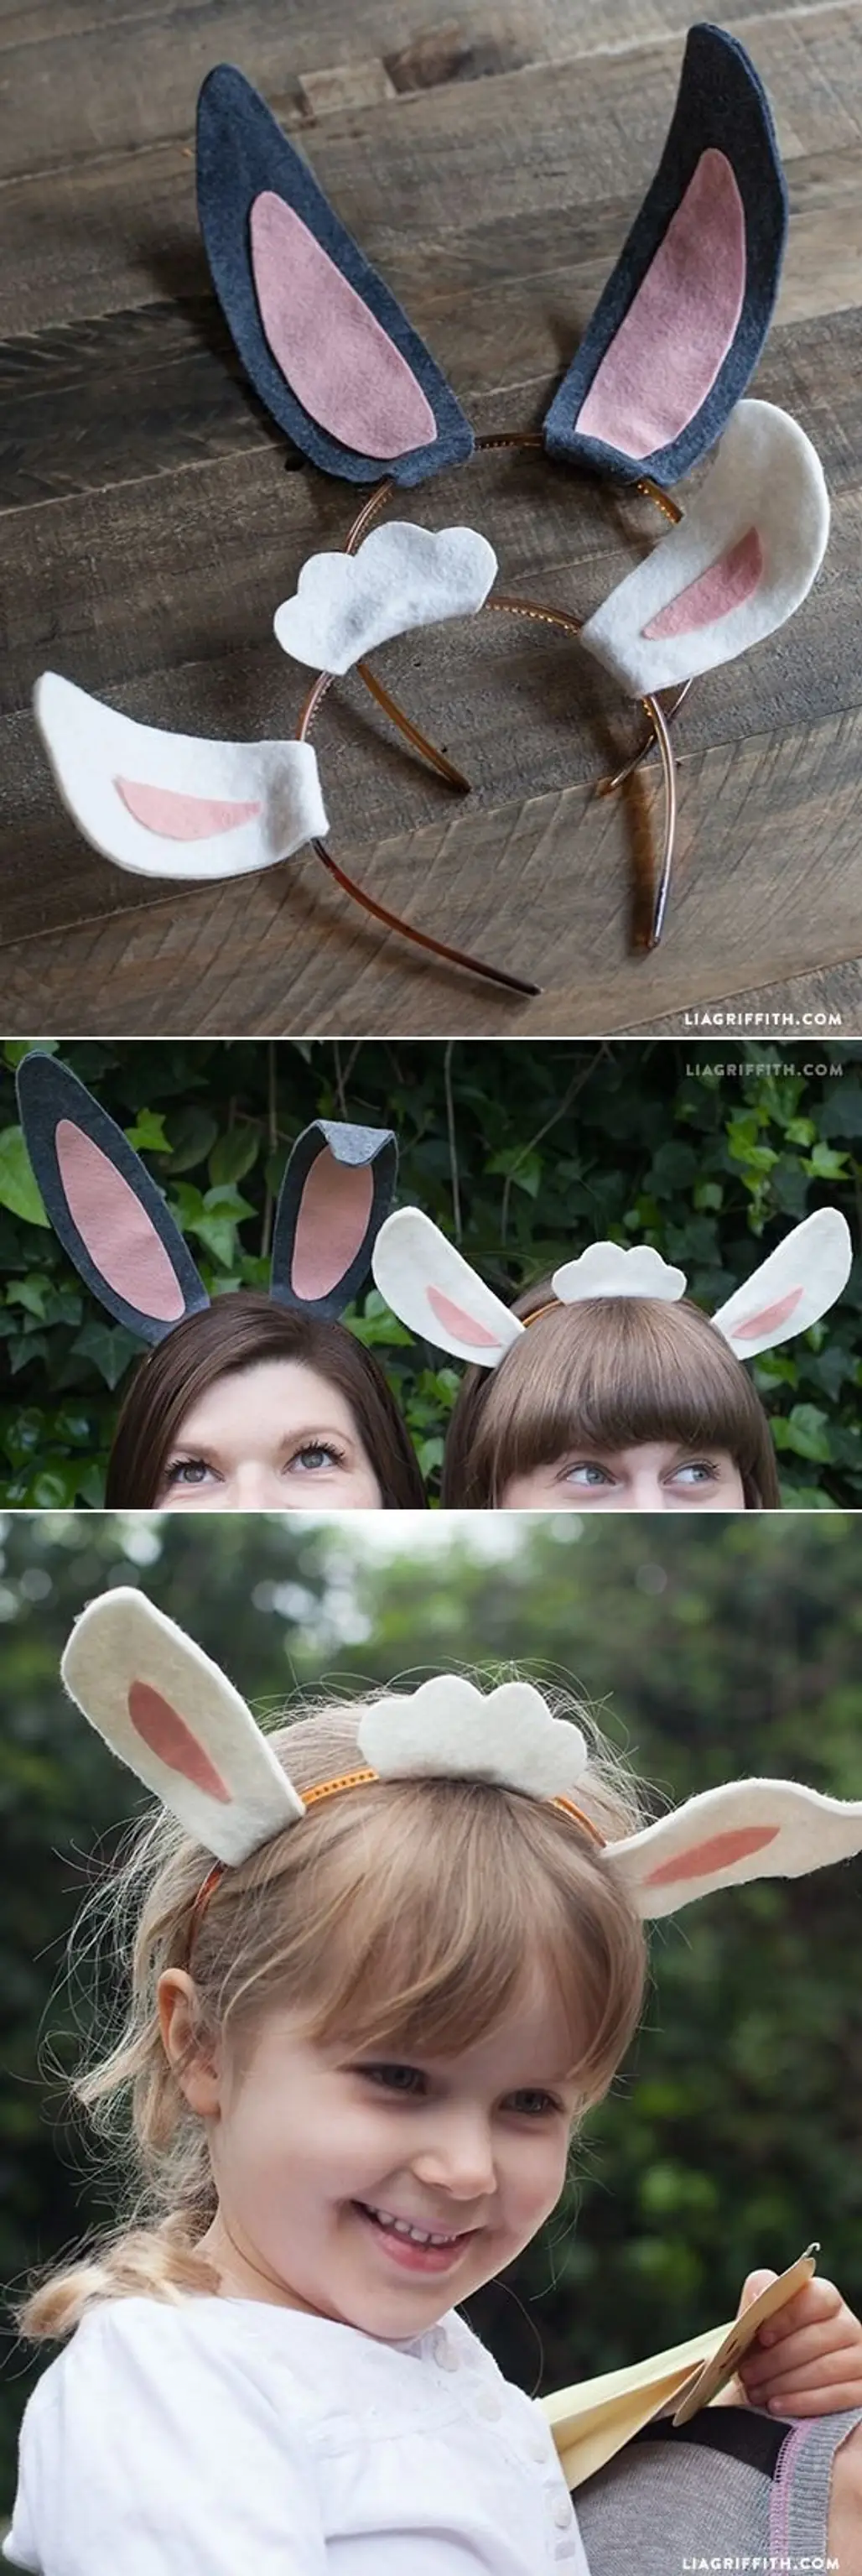 More Bunny Ears!